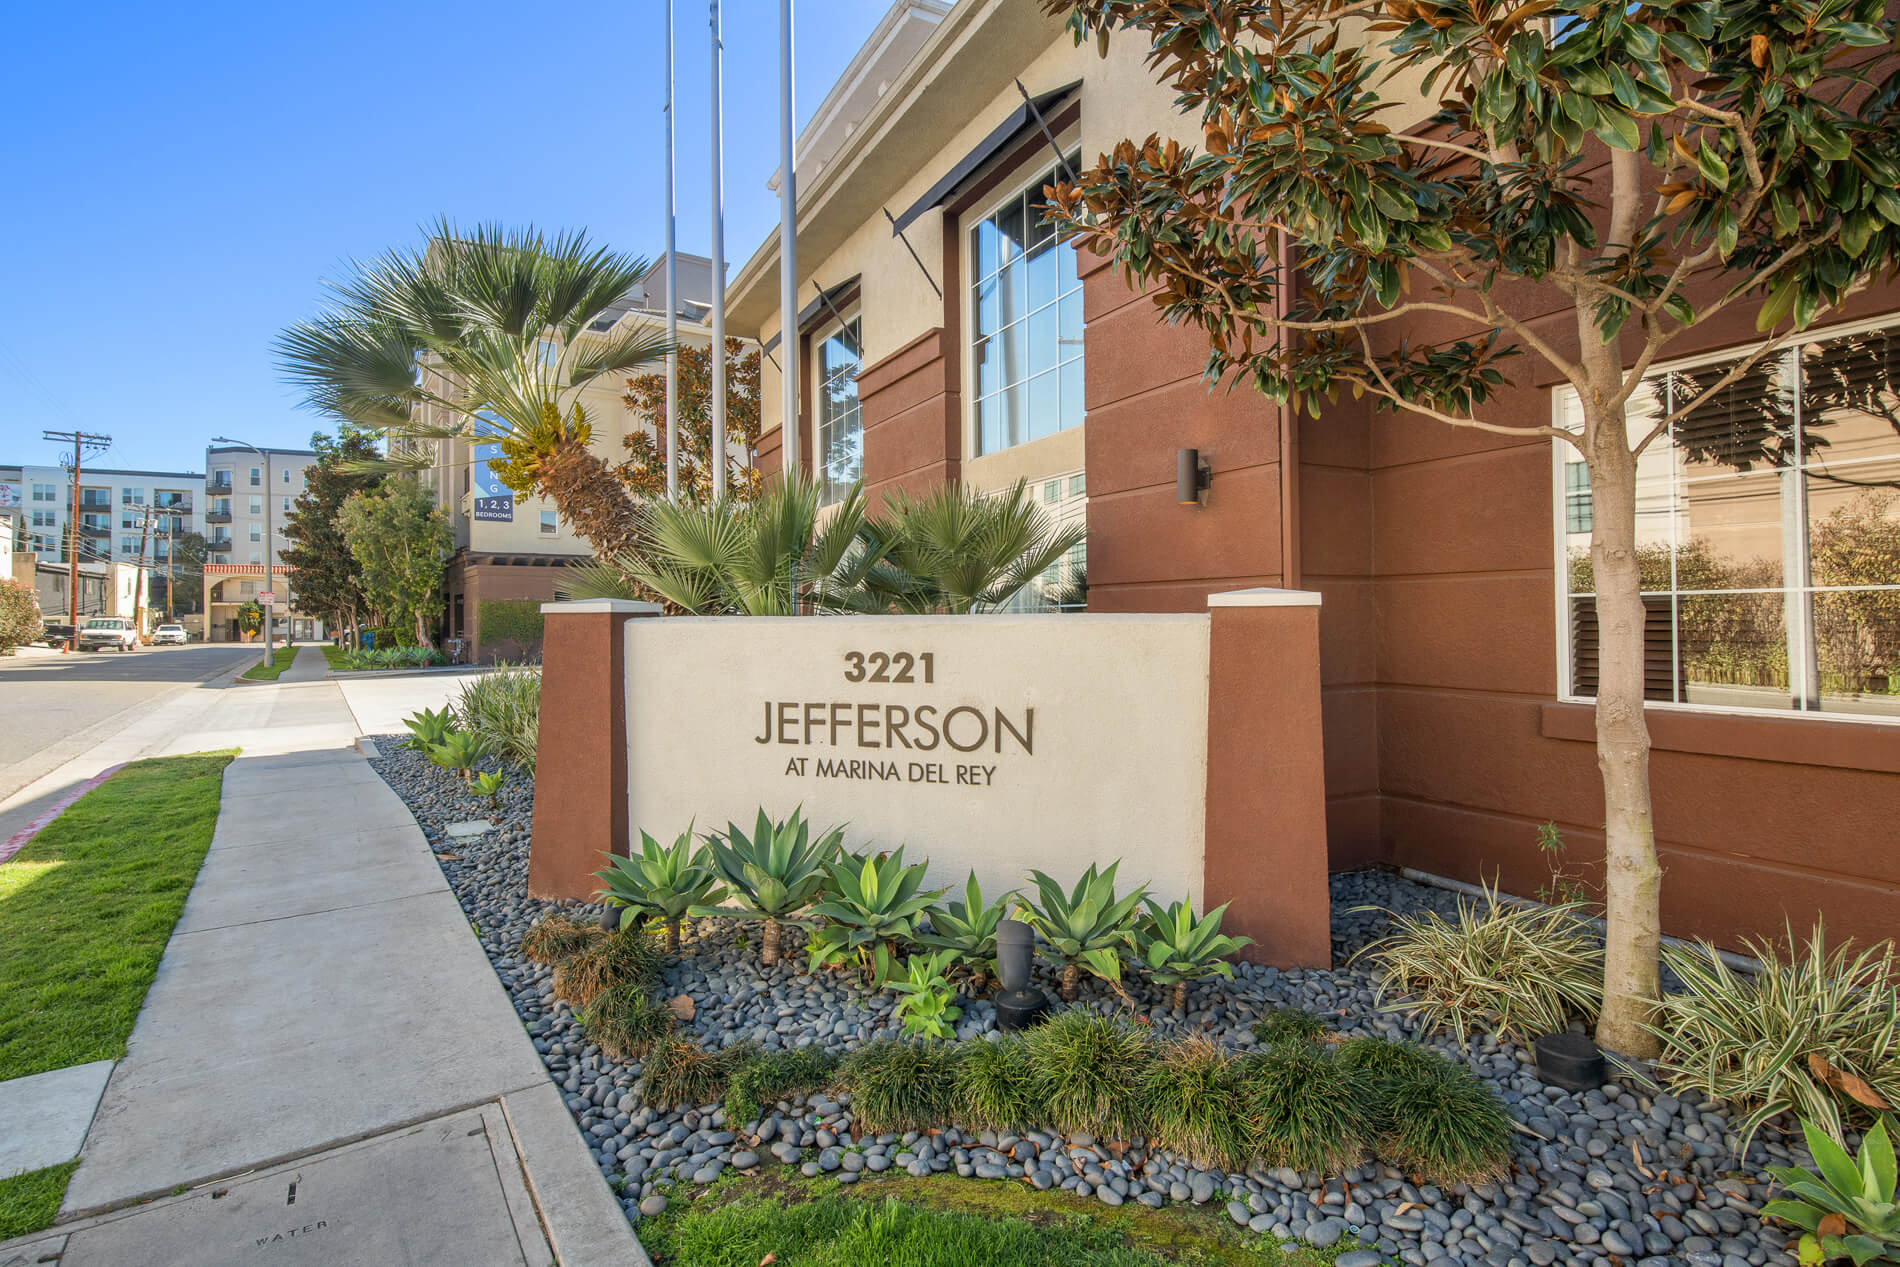 Jefferson at Marina Del Rey exterior sign